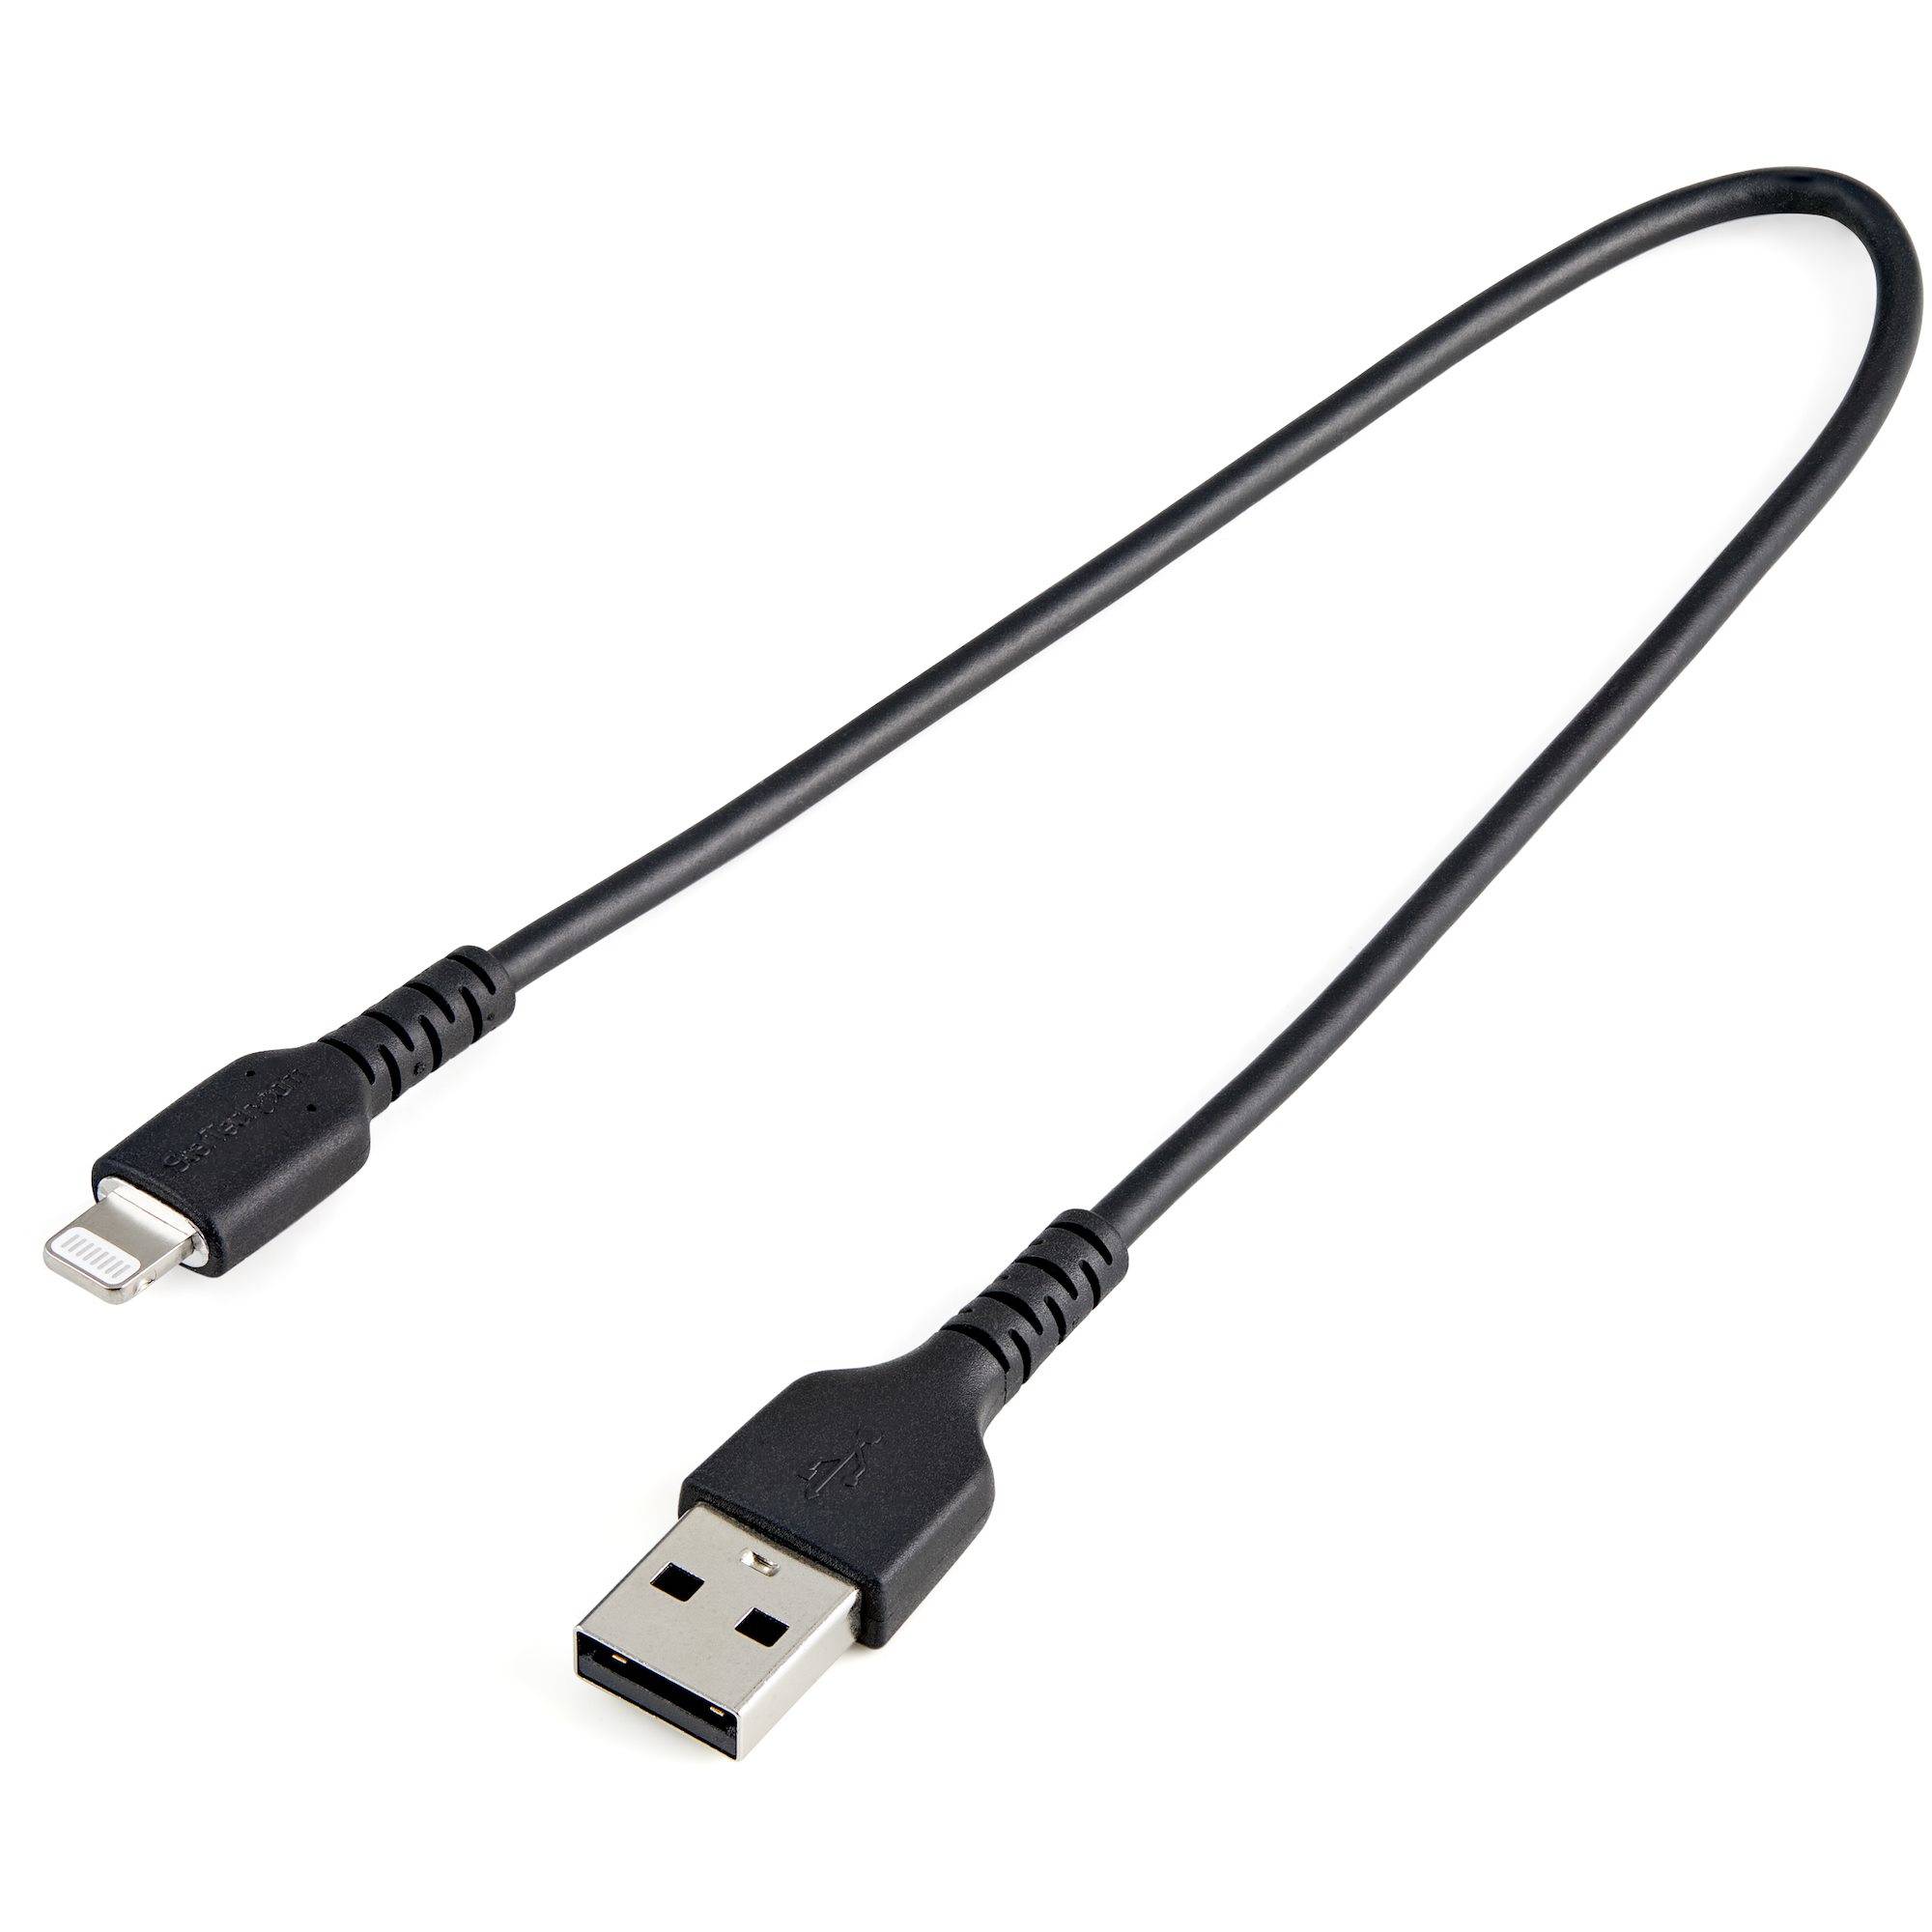 Rca Informatique - image du produit : 30CM USB TO LIGHTNING CABLE APPLE MFI CERTIFIED - BLACK